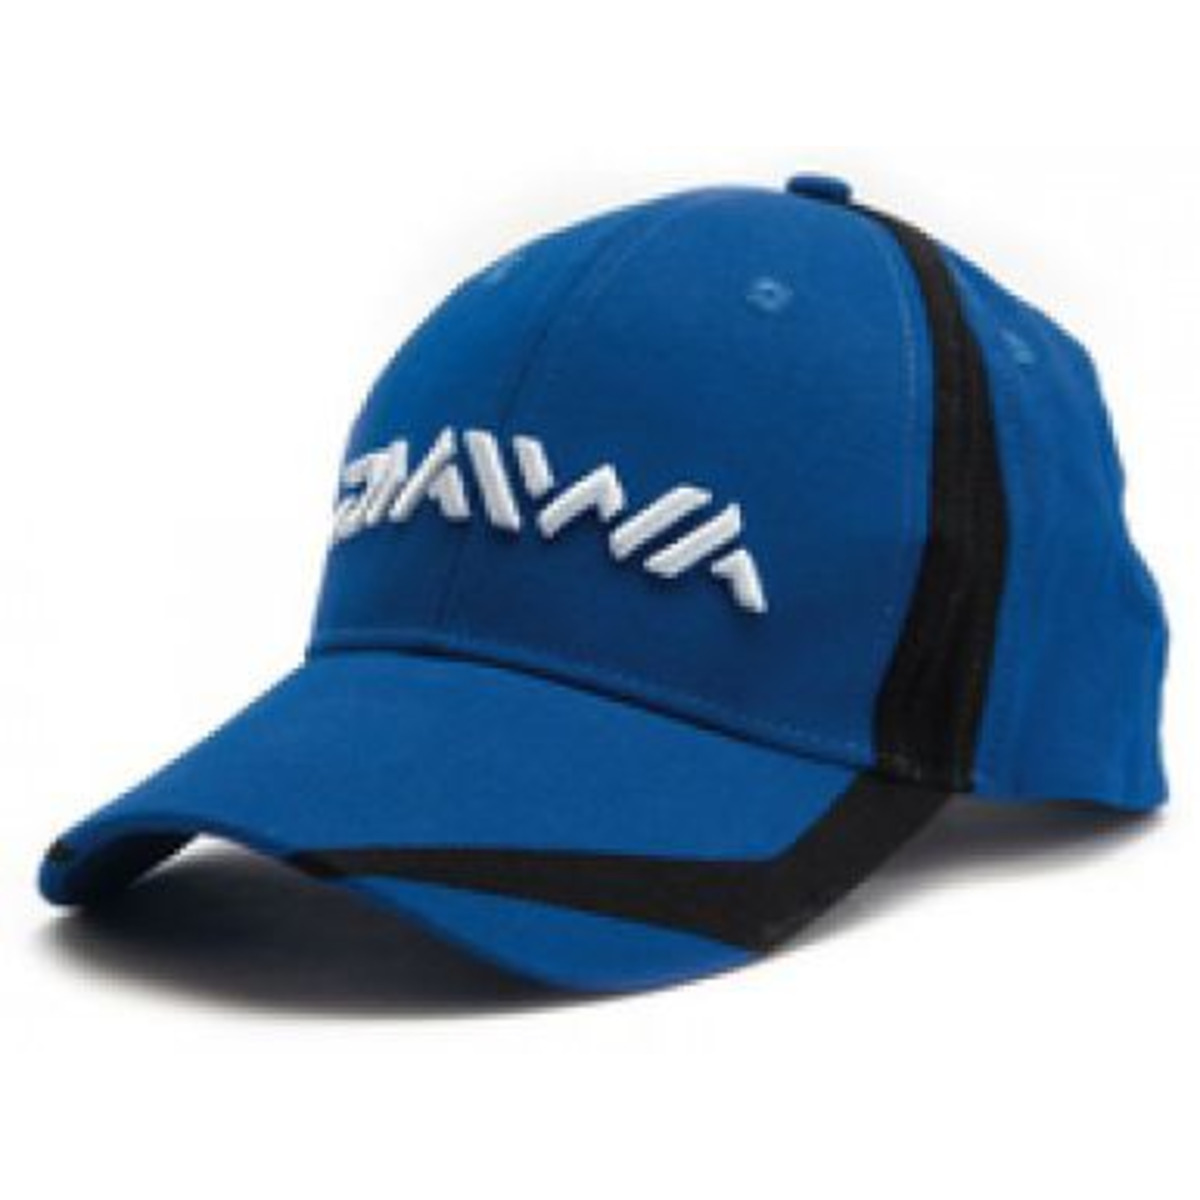 Daiwa Caps -  Blue-Black         